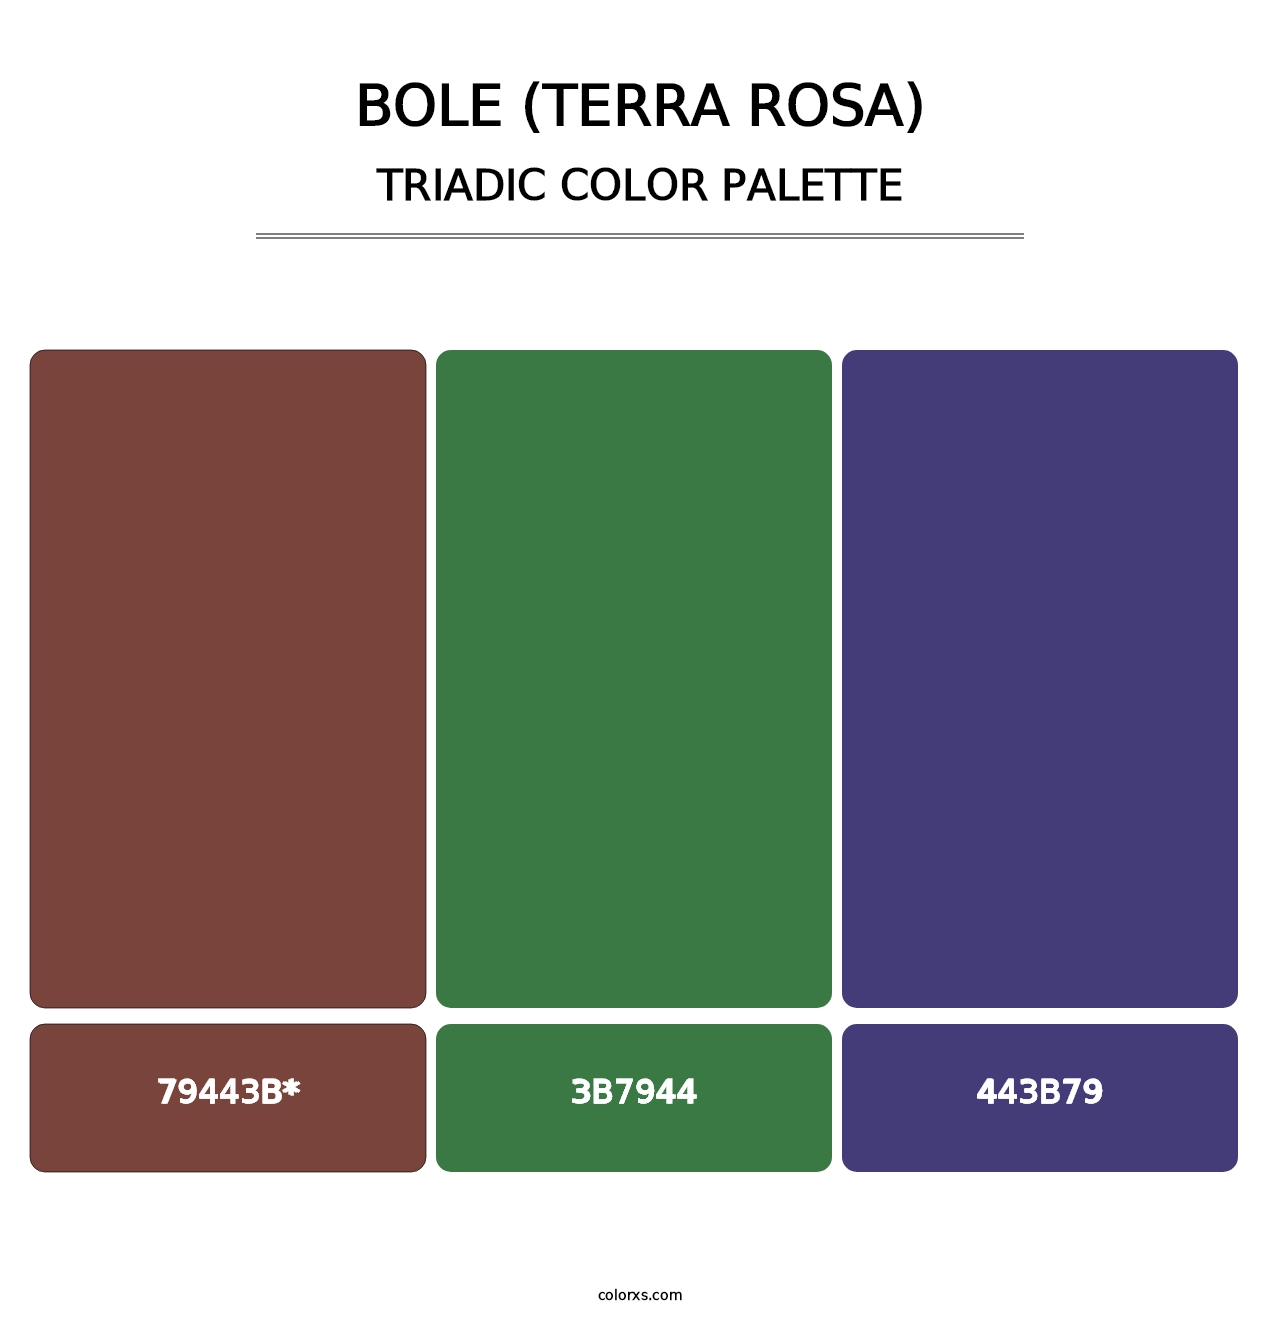 Bole (Terra Rosa) - Triadic Color Palette